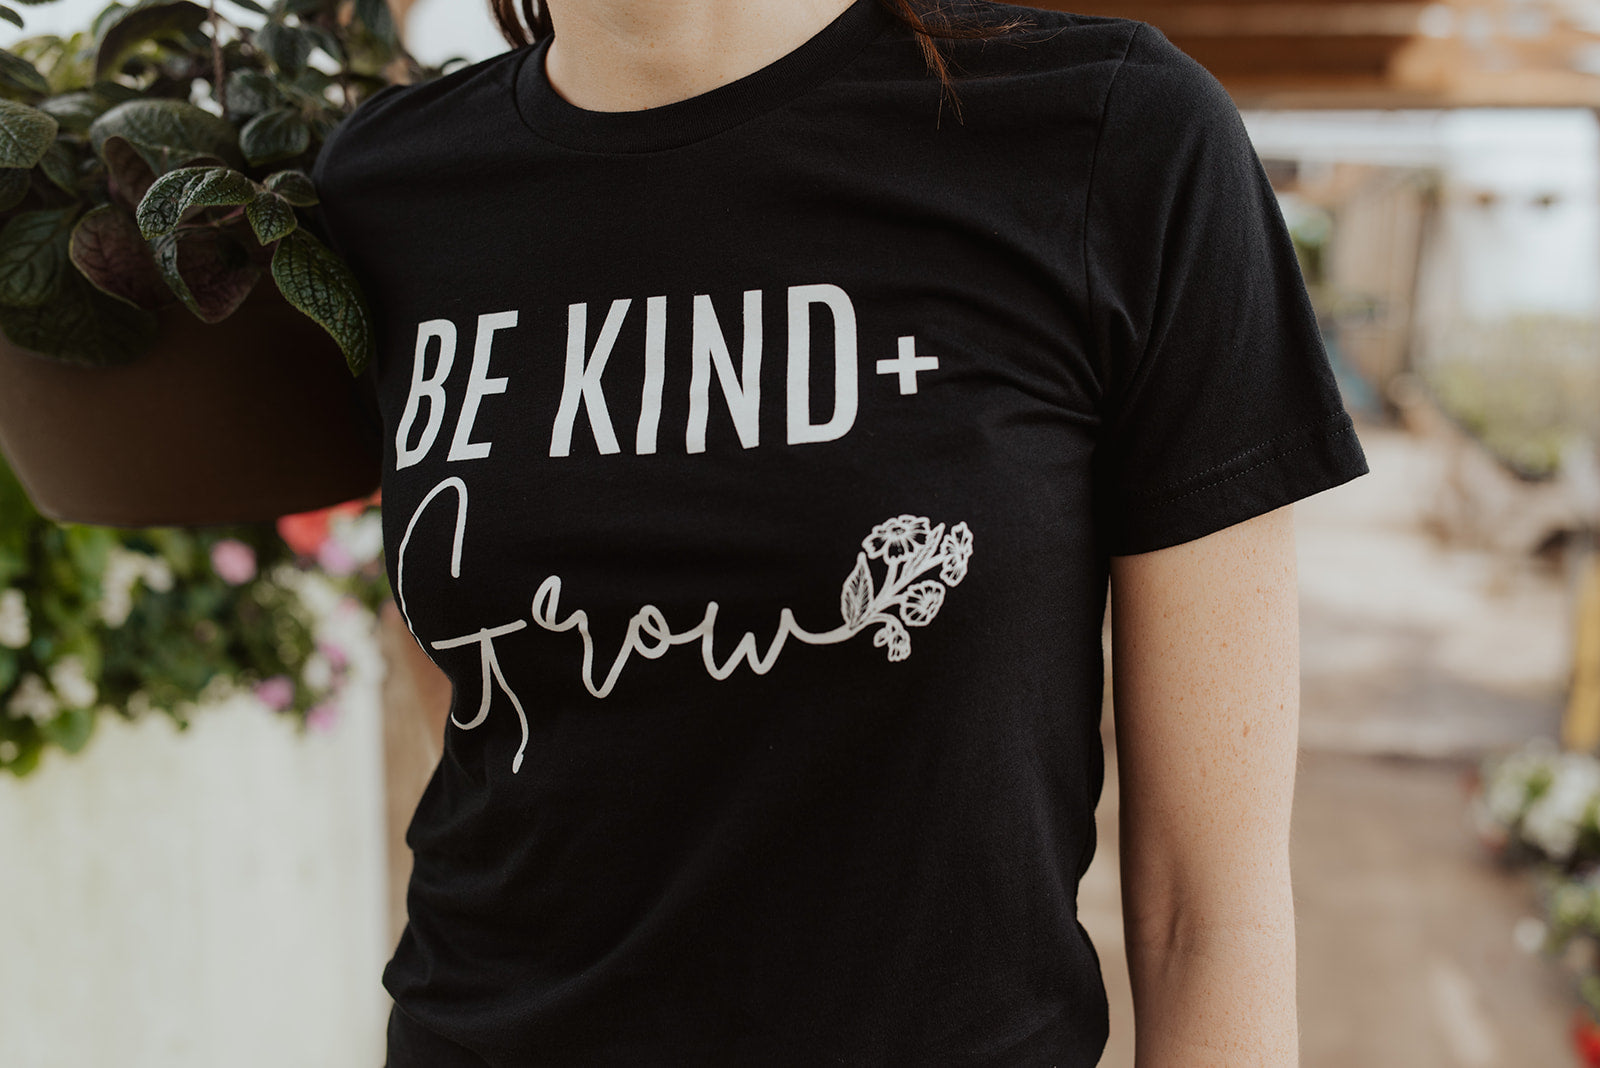 Be Kind + Grow Tee